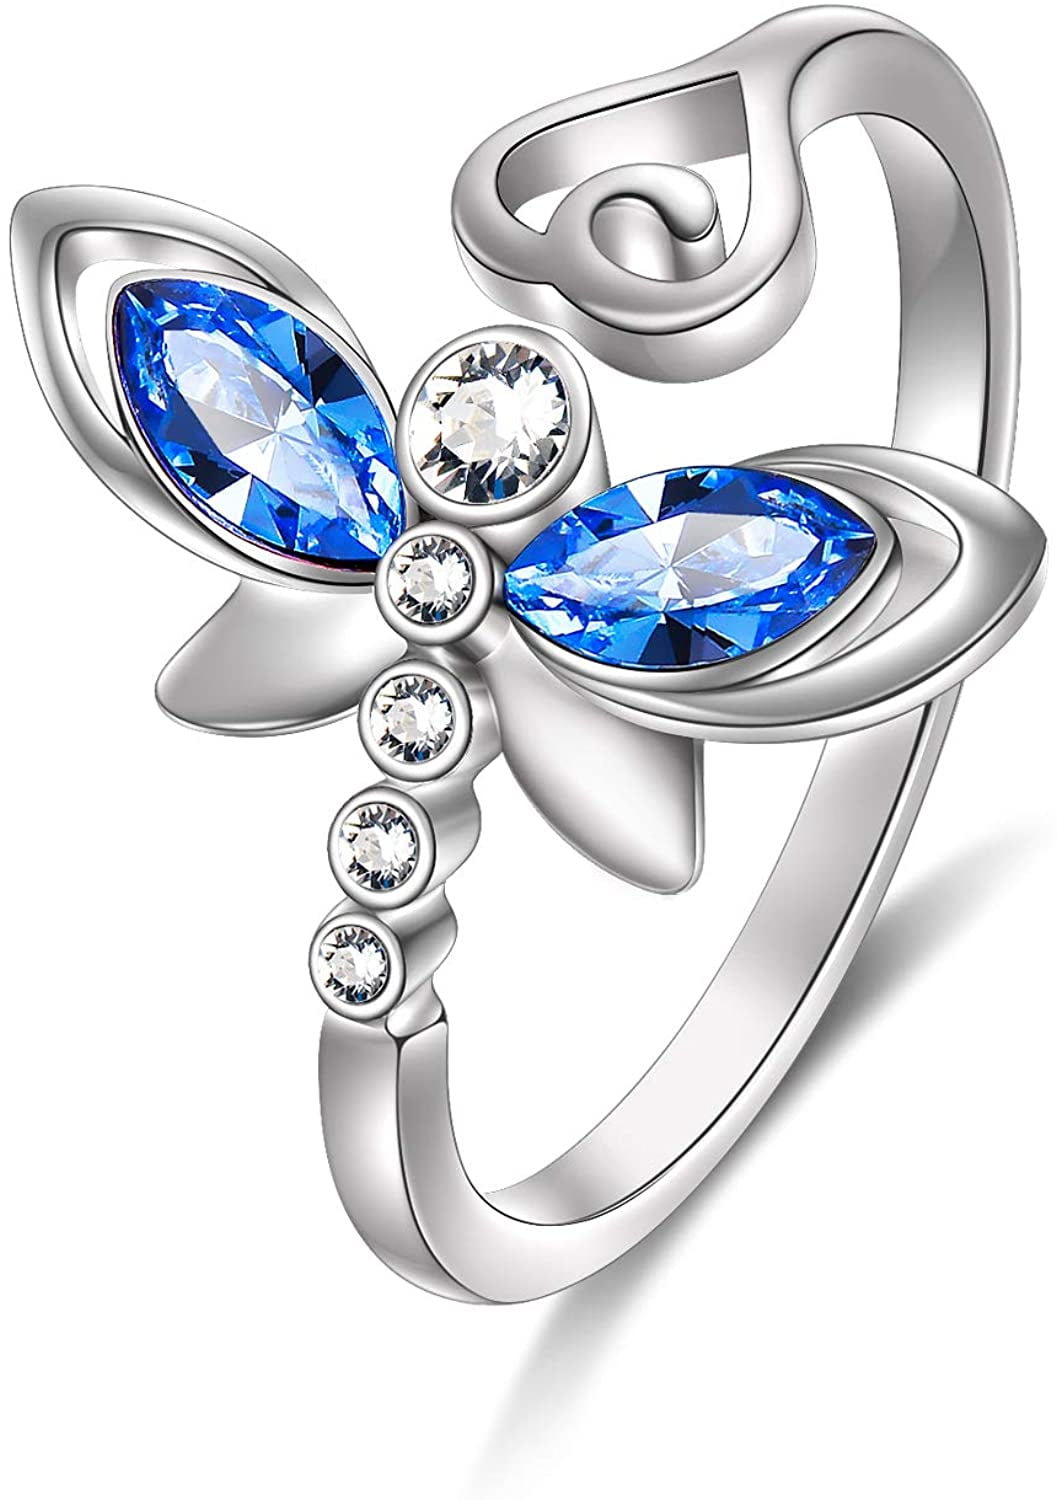 Czjewelry Princess of Ocean Mermaid Blue Crystal Open Ring Size Adjustable Women Girls Jewelry 